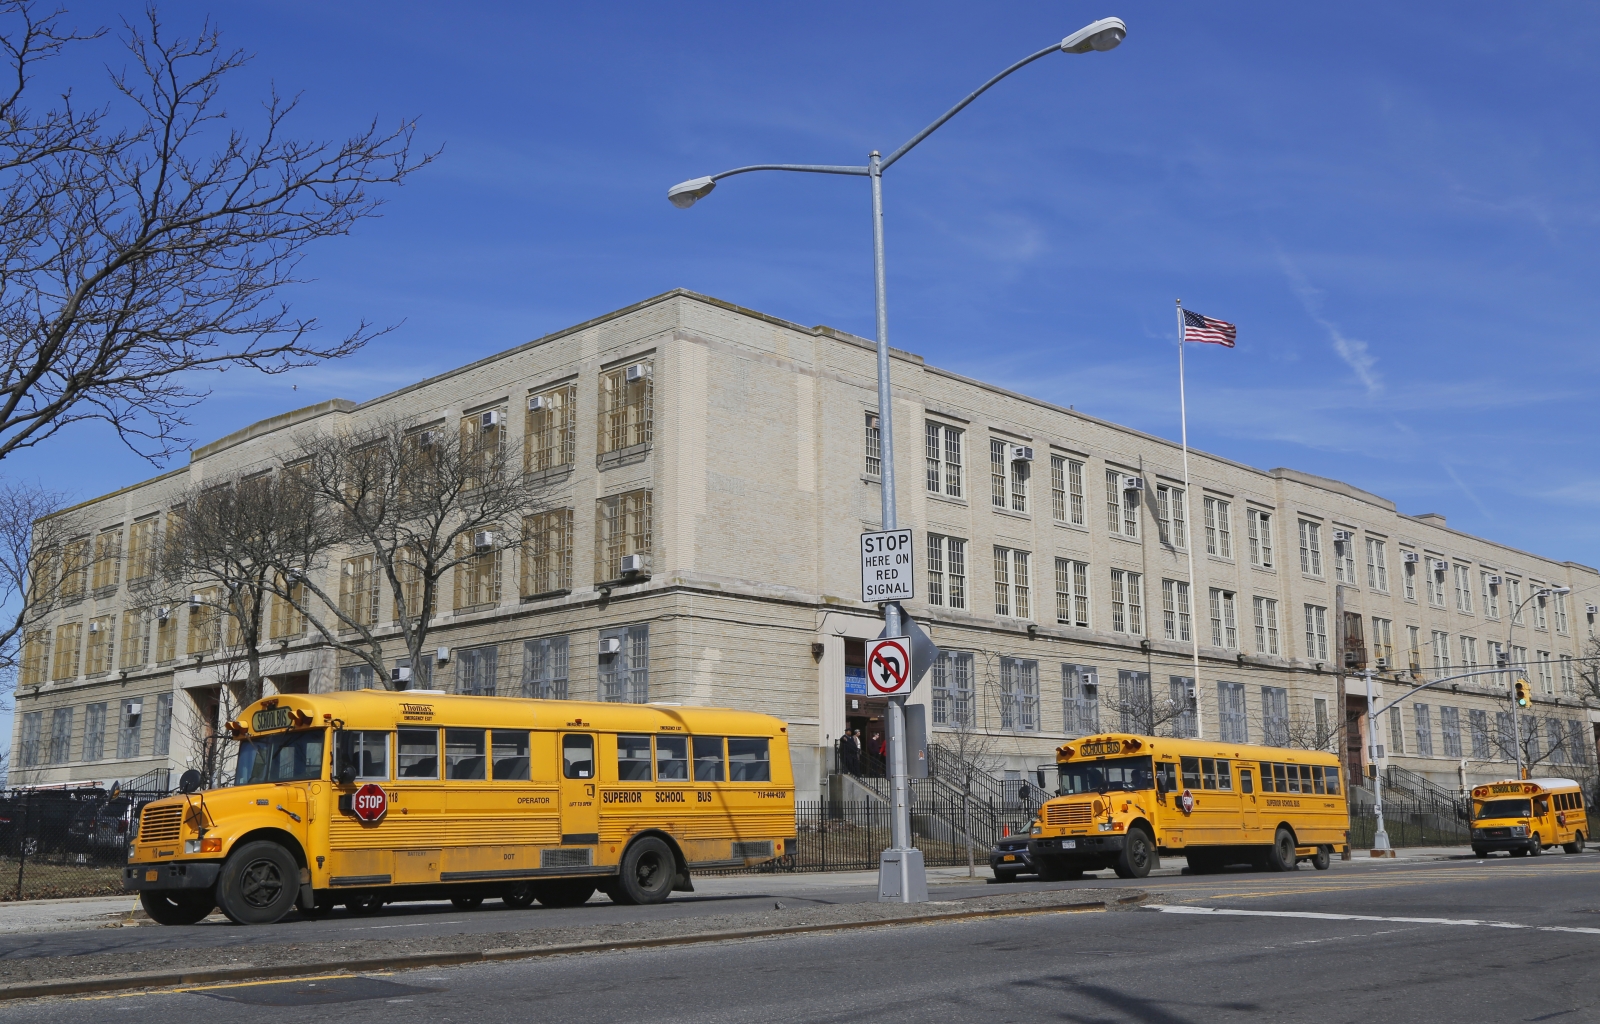 image of public school in New York City